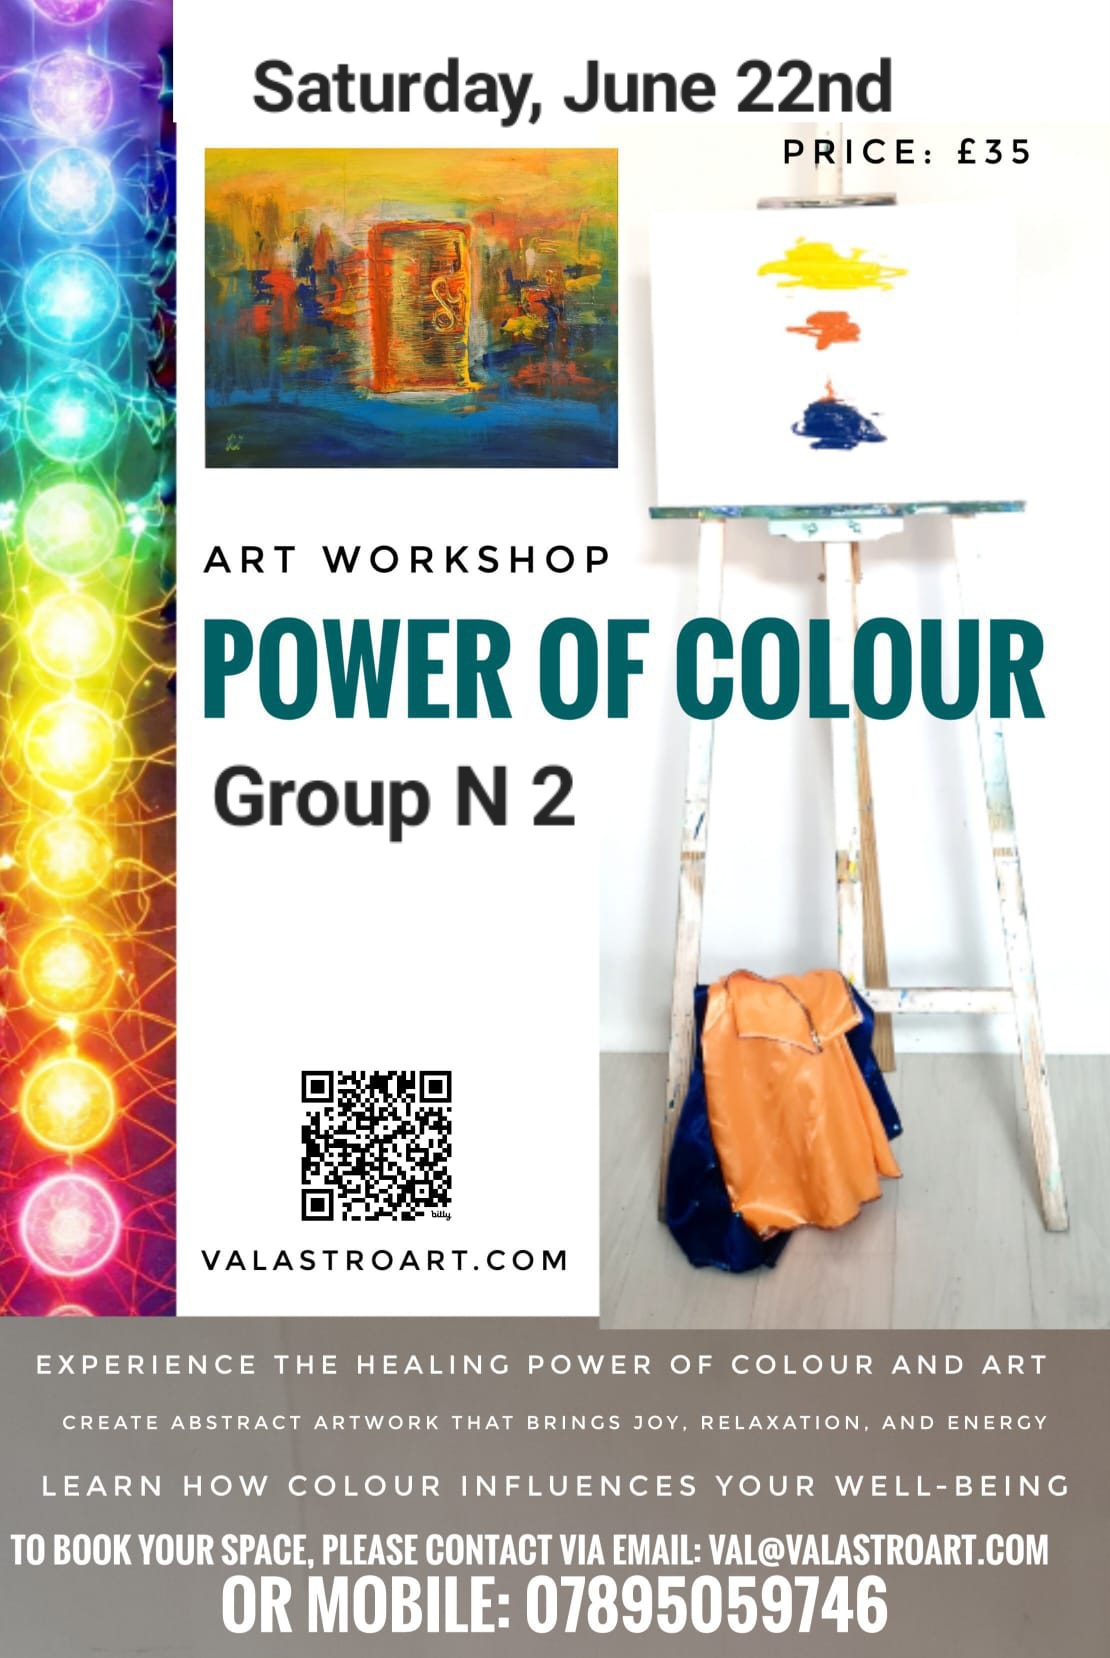 Art Workshop: The Power of Colour. Burton-on-Trent. Group N2.